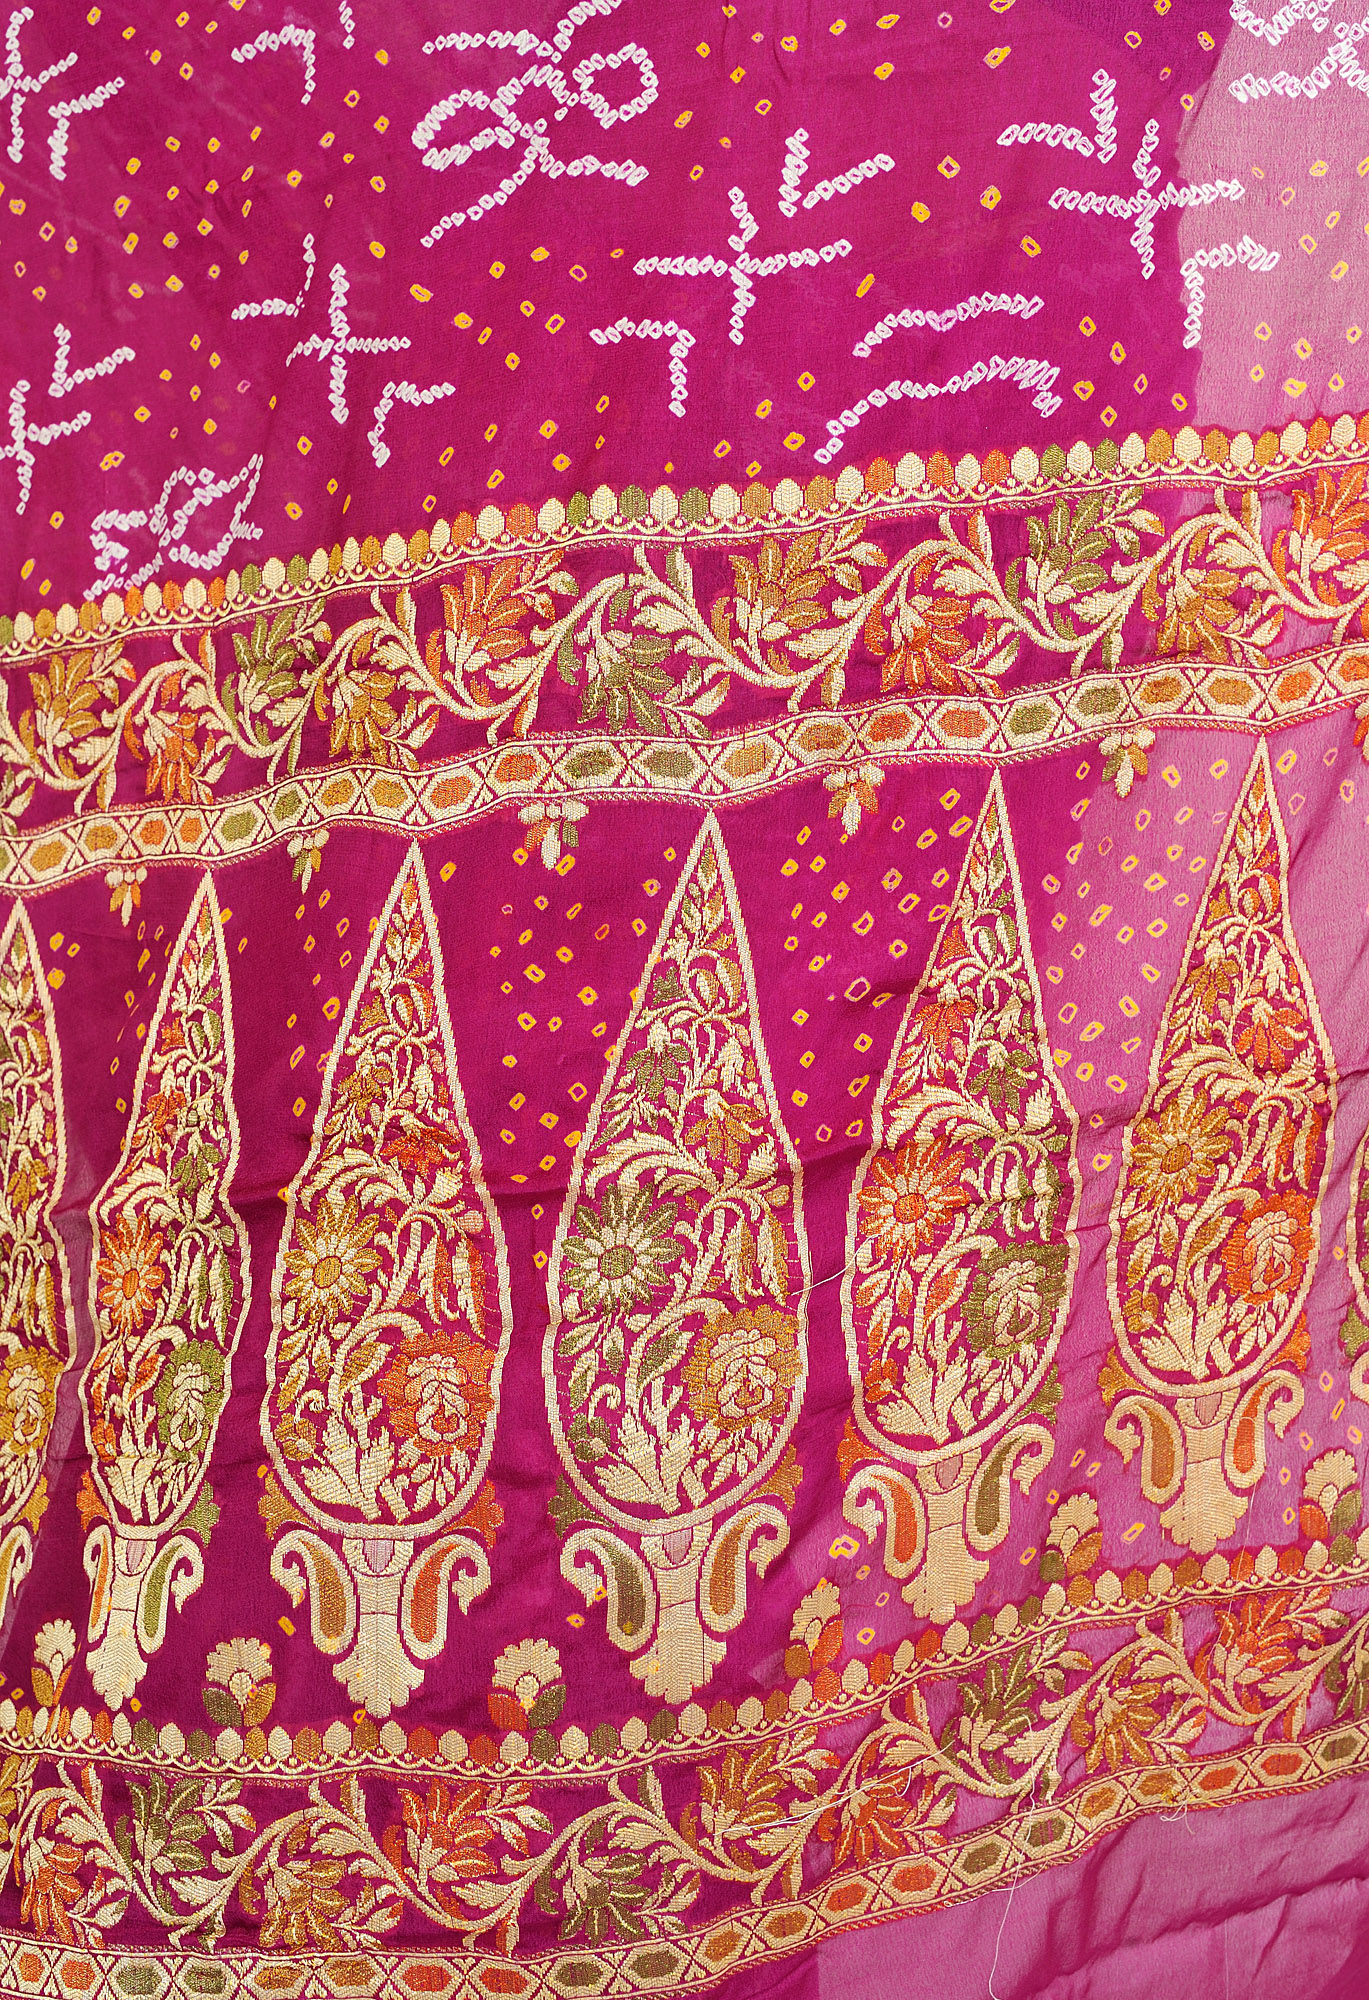 Wild-Aster Bandhani Tie-Dye Sari from Jodhpur with Floral Woven Border ...